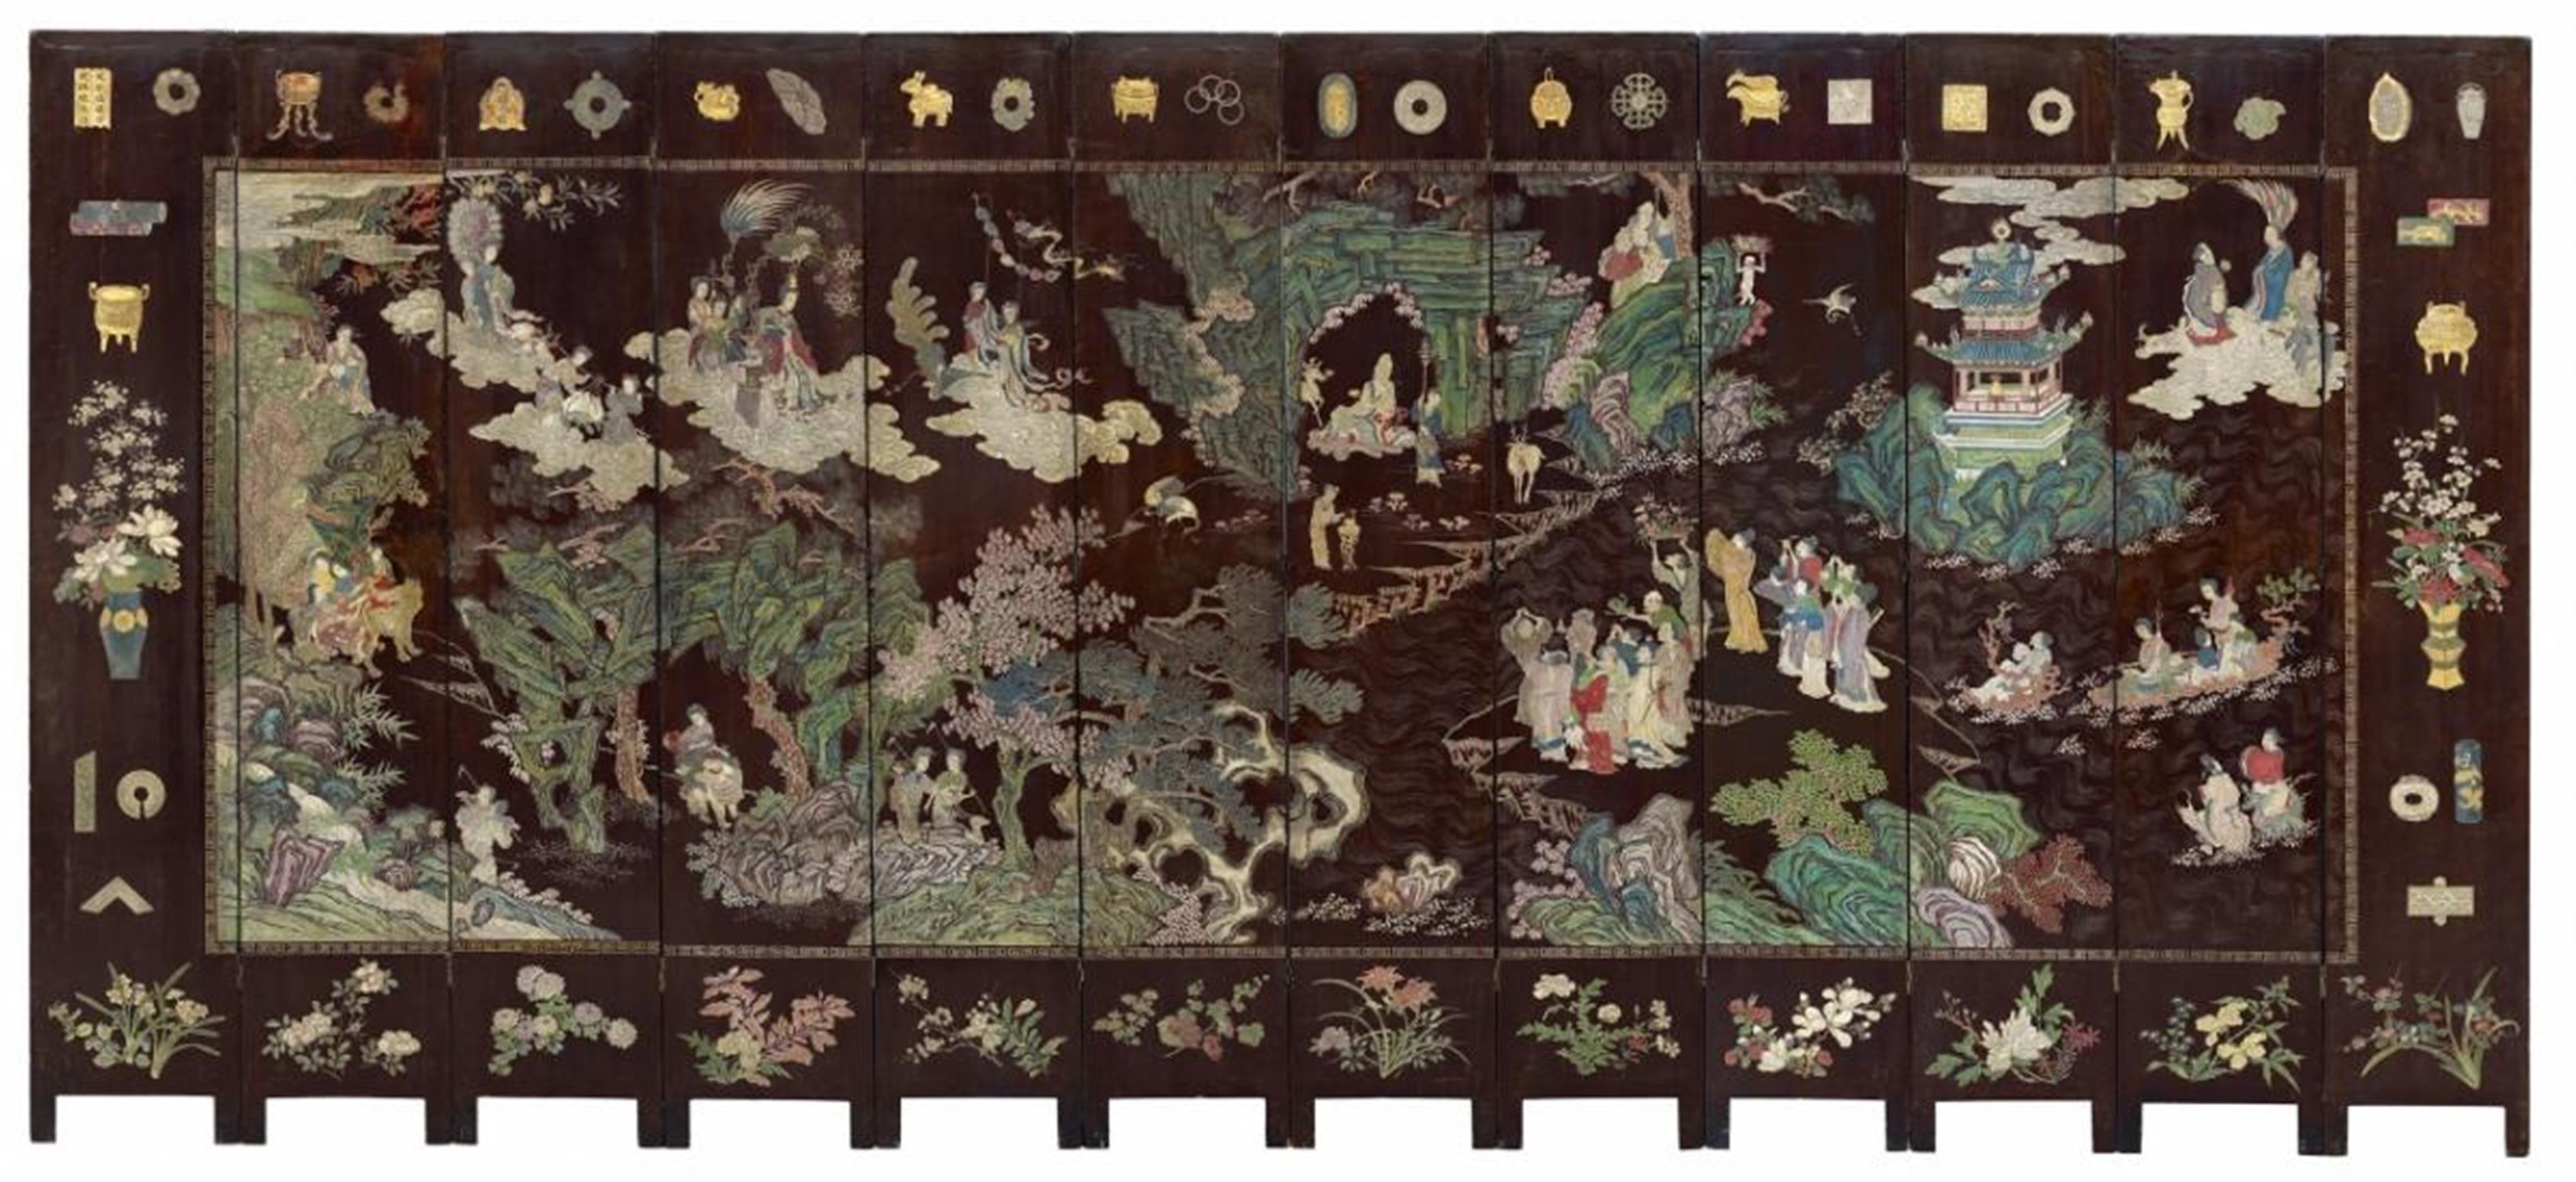 12-tlger Koromandel-Stellschirm. Holz, Schwarzlack und Farben (Kuancai-Technik). Ära Kangxi (1662-1722) - image-1